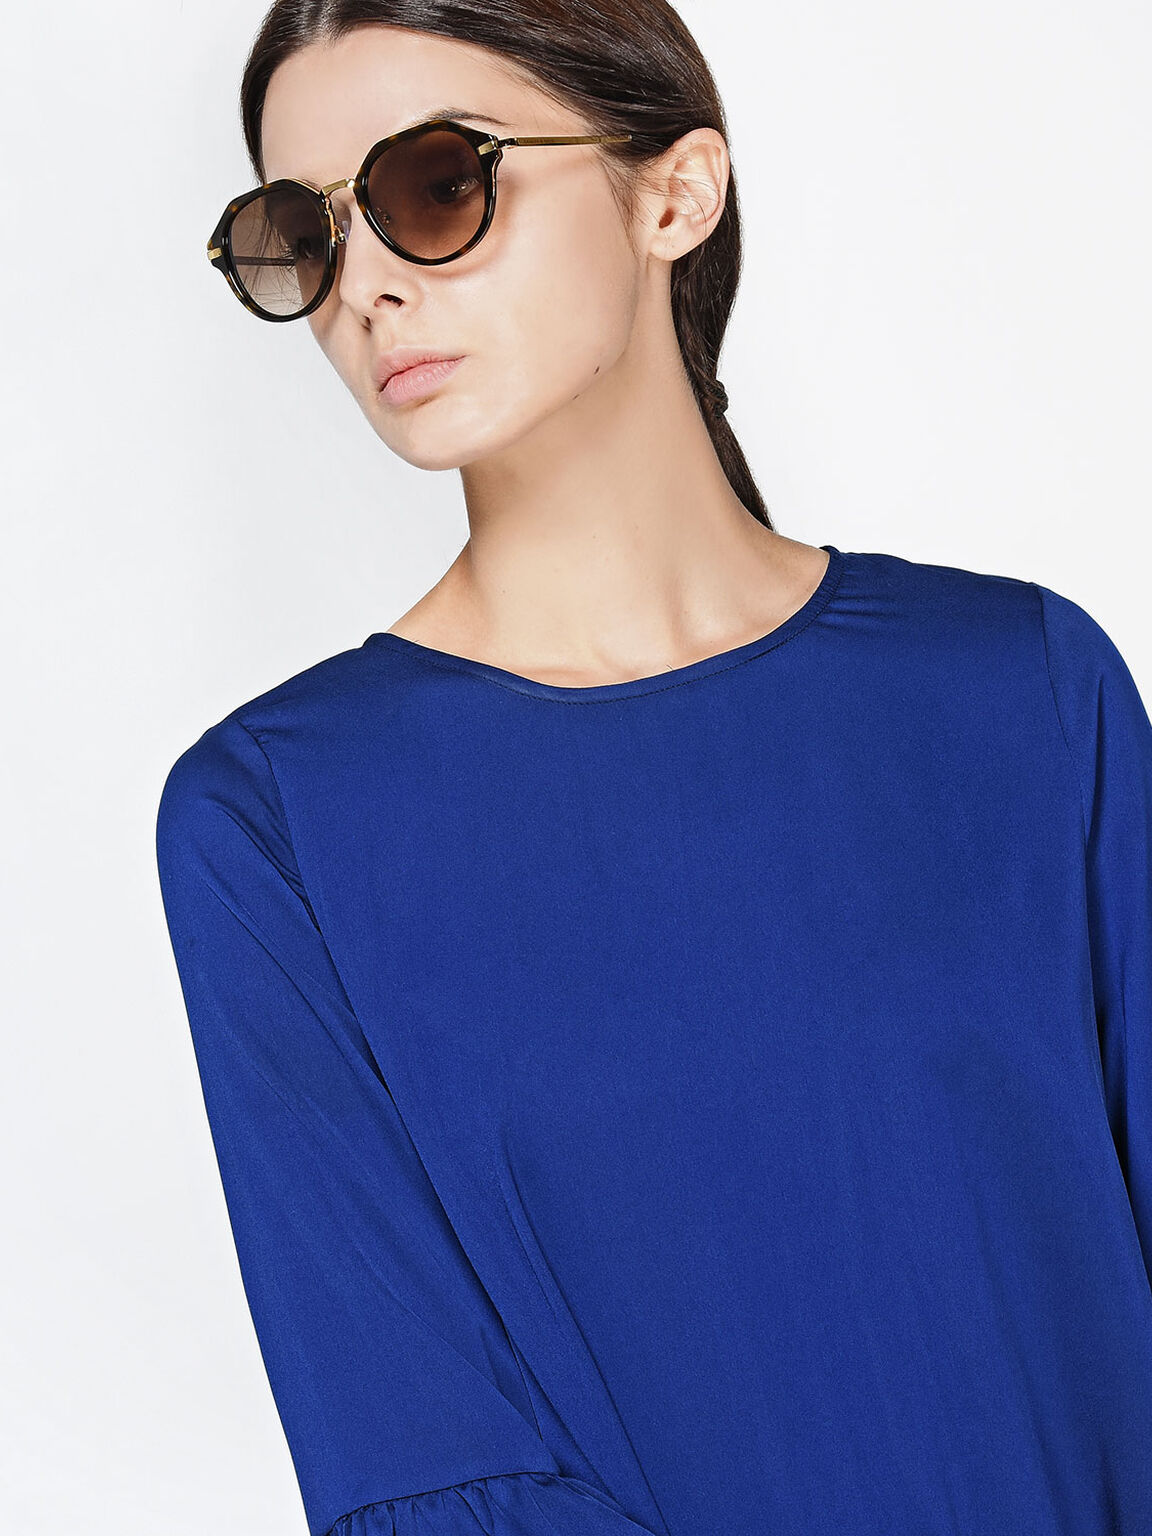 Solana Angular Oval Sunglasses - T. Shell